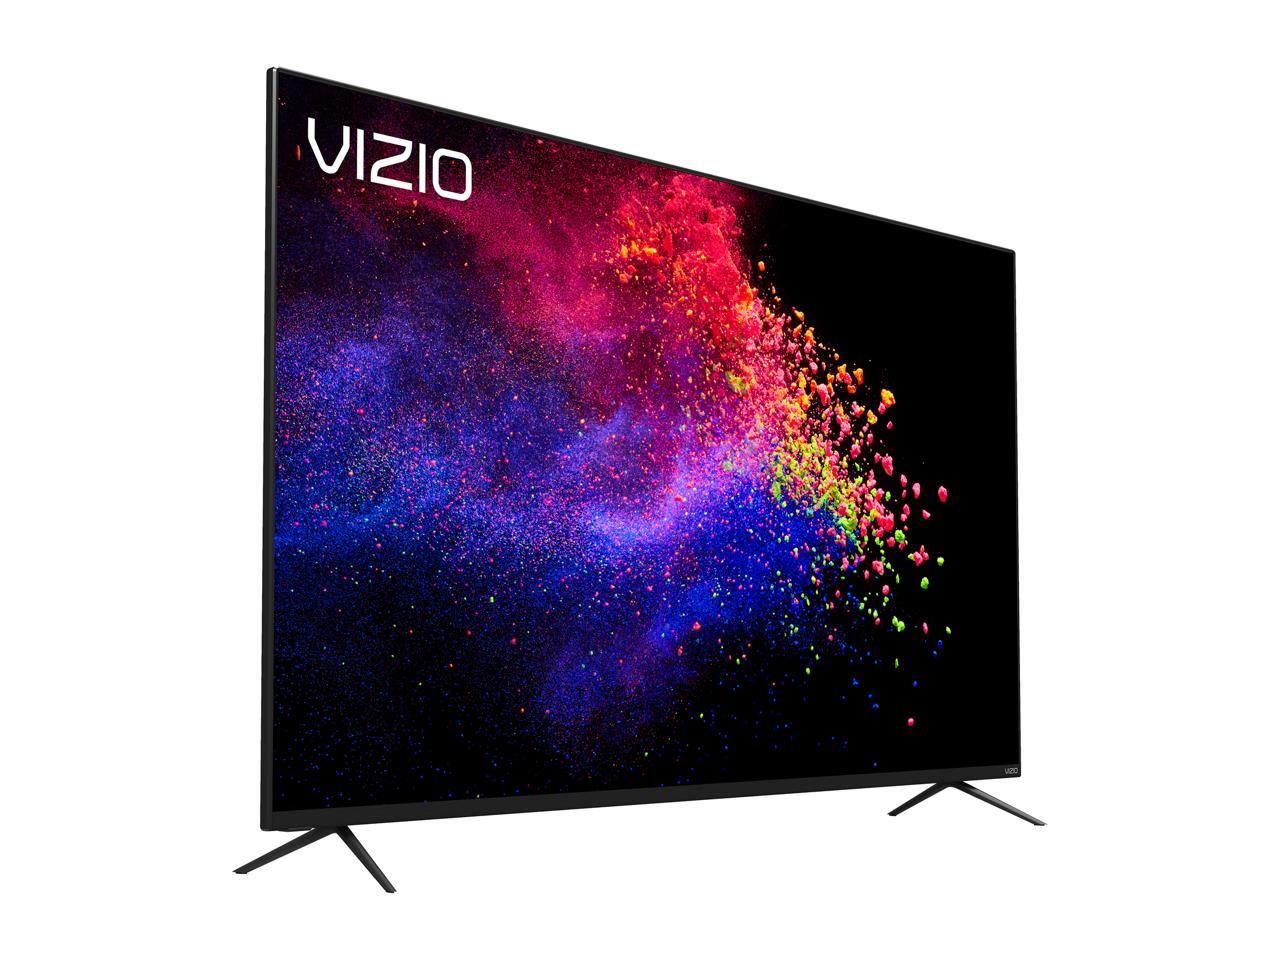 VIZIO MSeries Quantum 55" Class 4K HDR Smart LED TV M558G1 (2019)  eBay